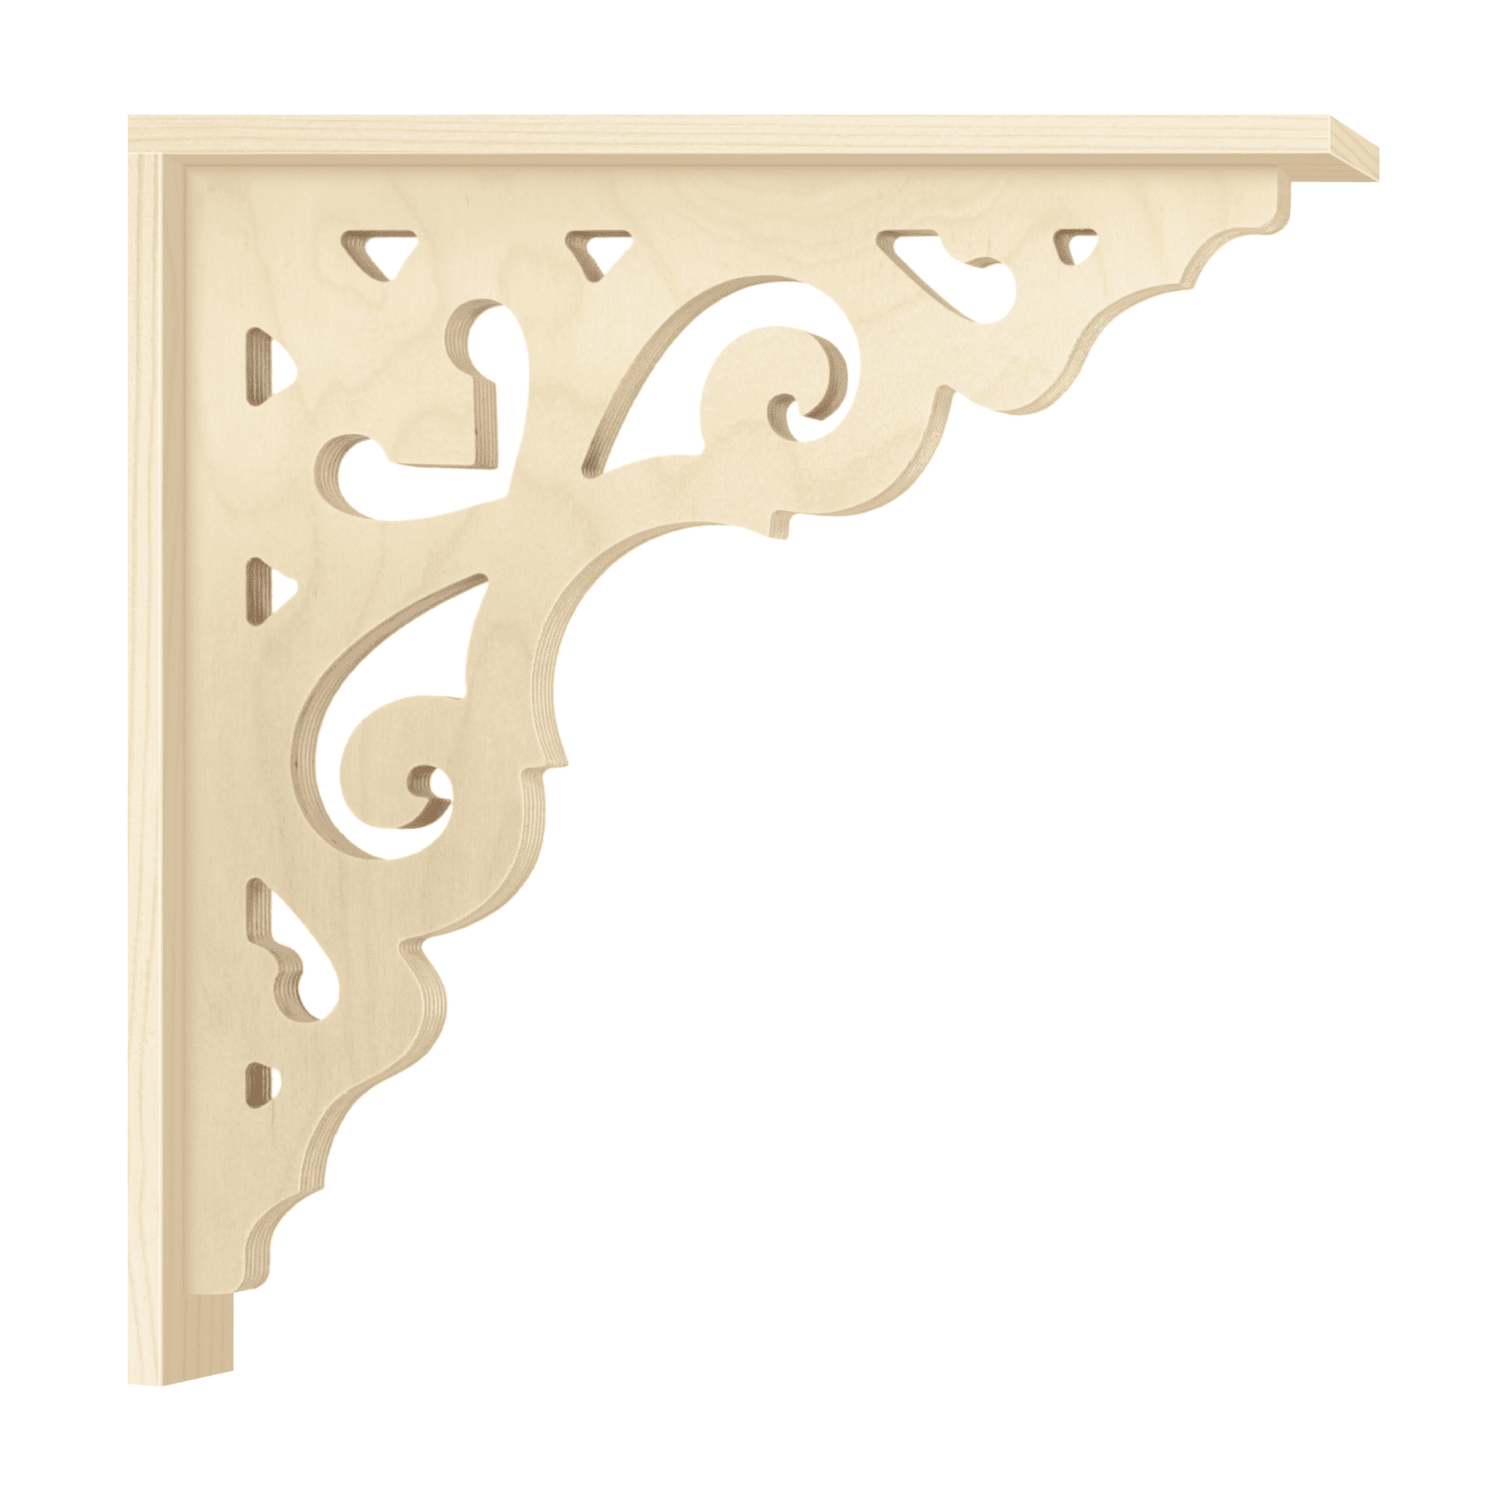 Bracket 027 – Victorian corbel for porch and veranda with decorative wooden strip